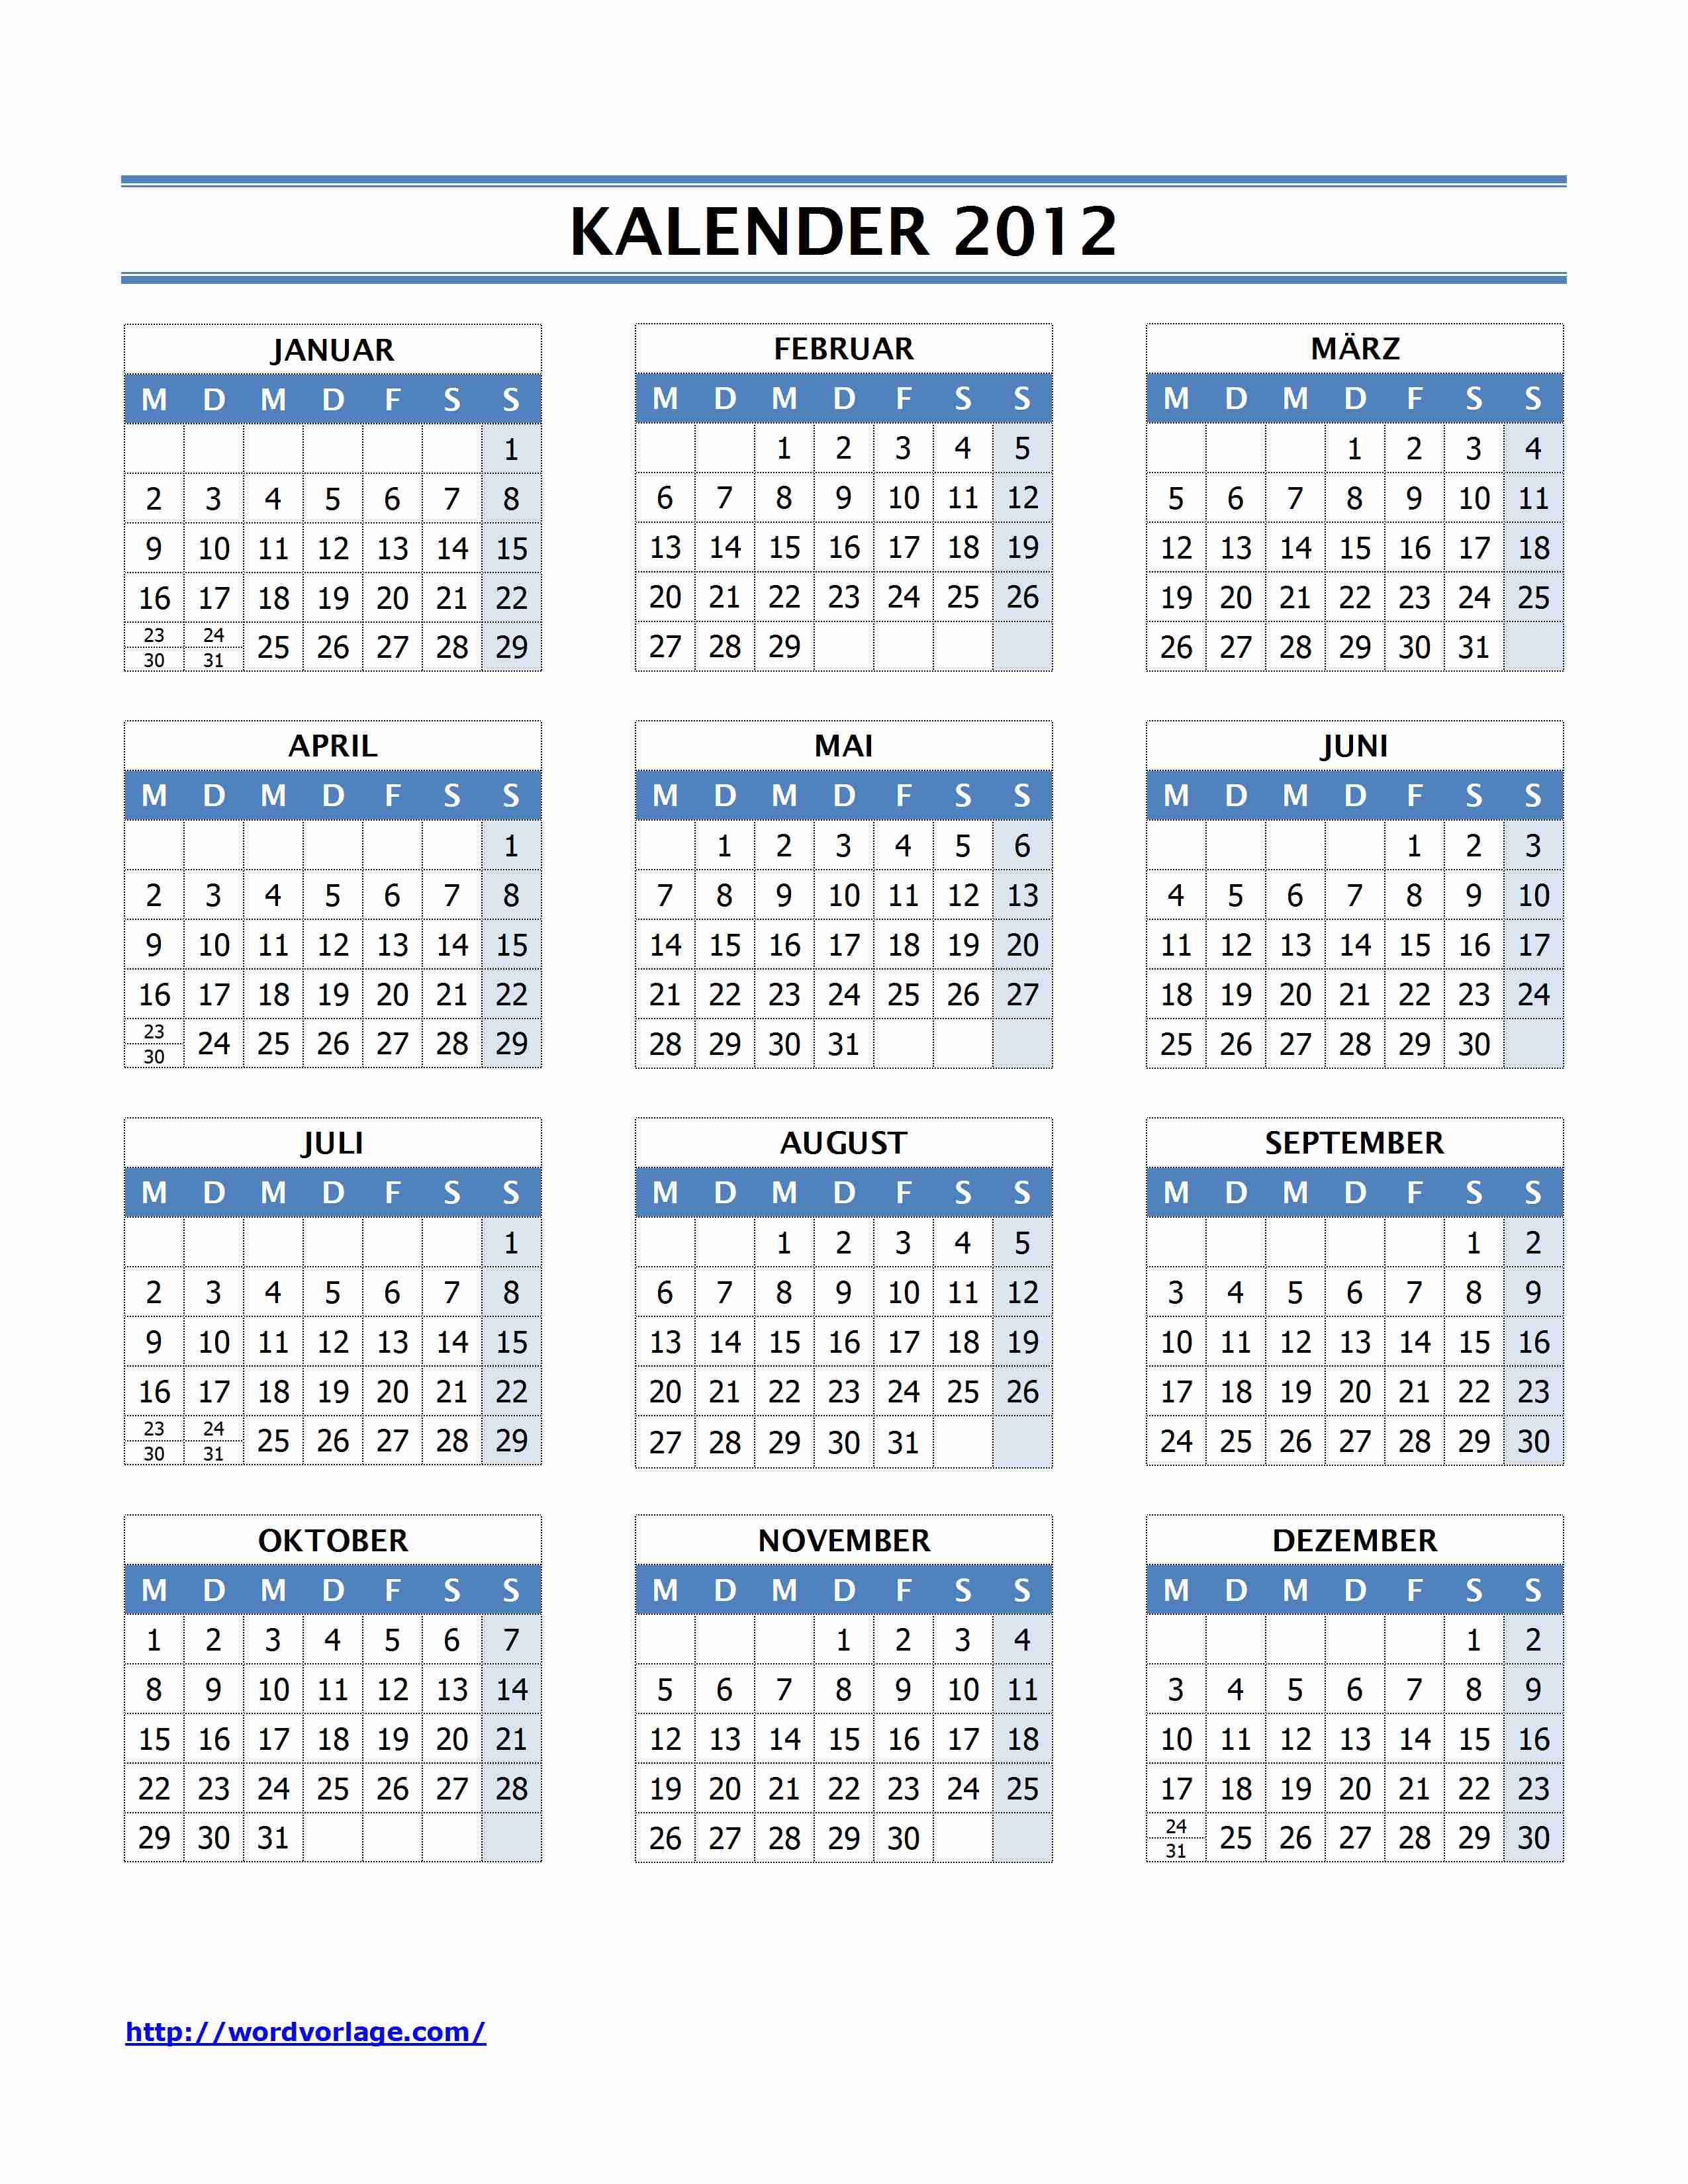 Kalender-2012